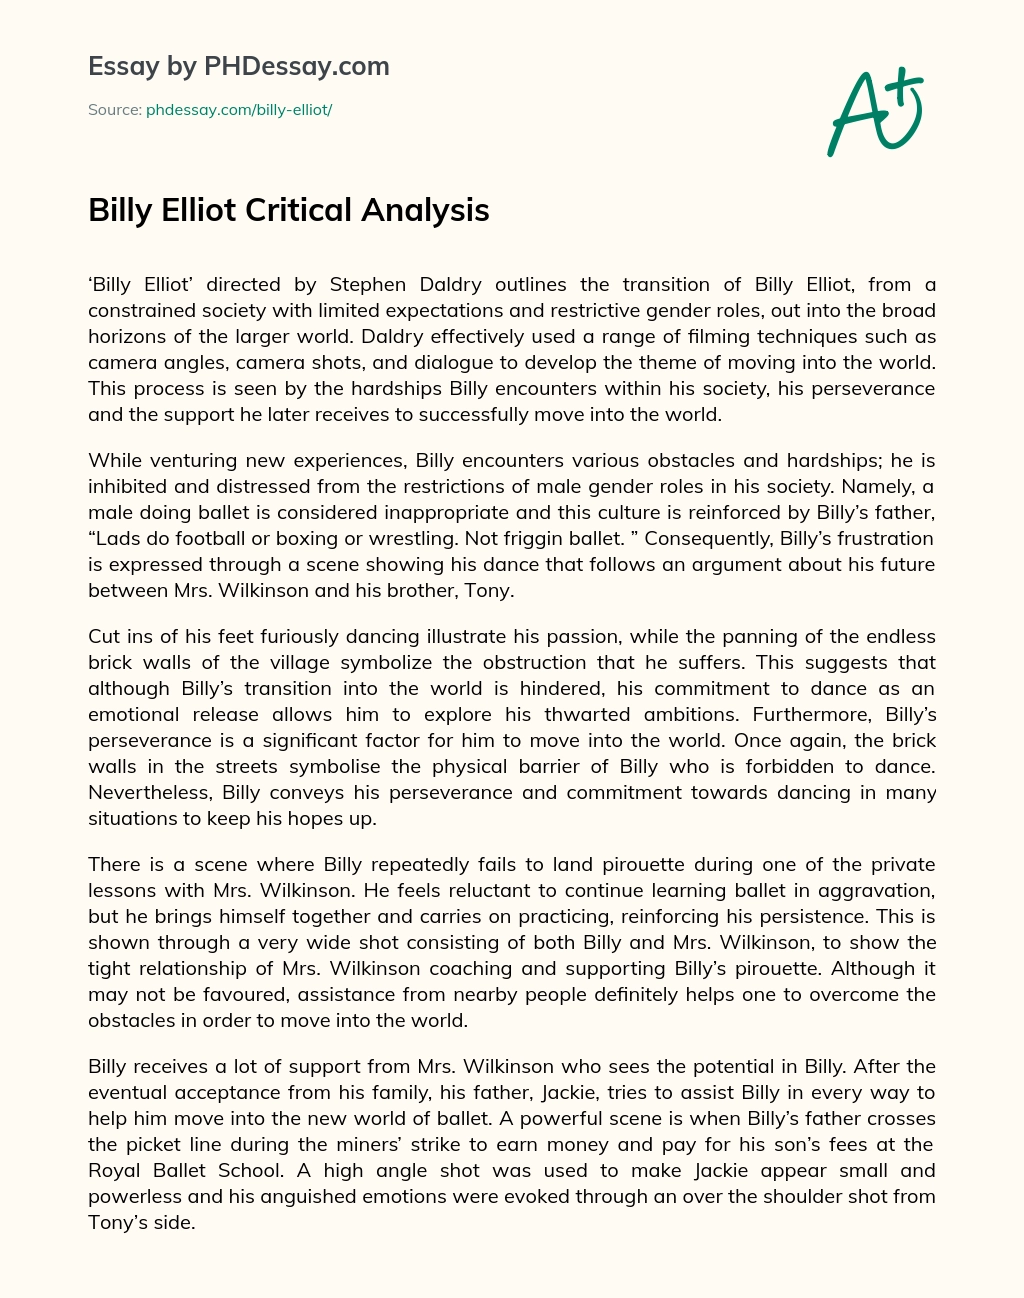 Billy Elliot Critical Analysis essay